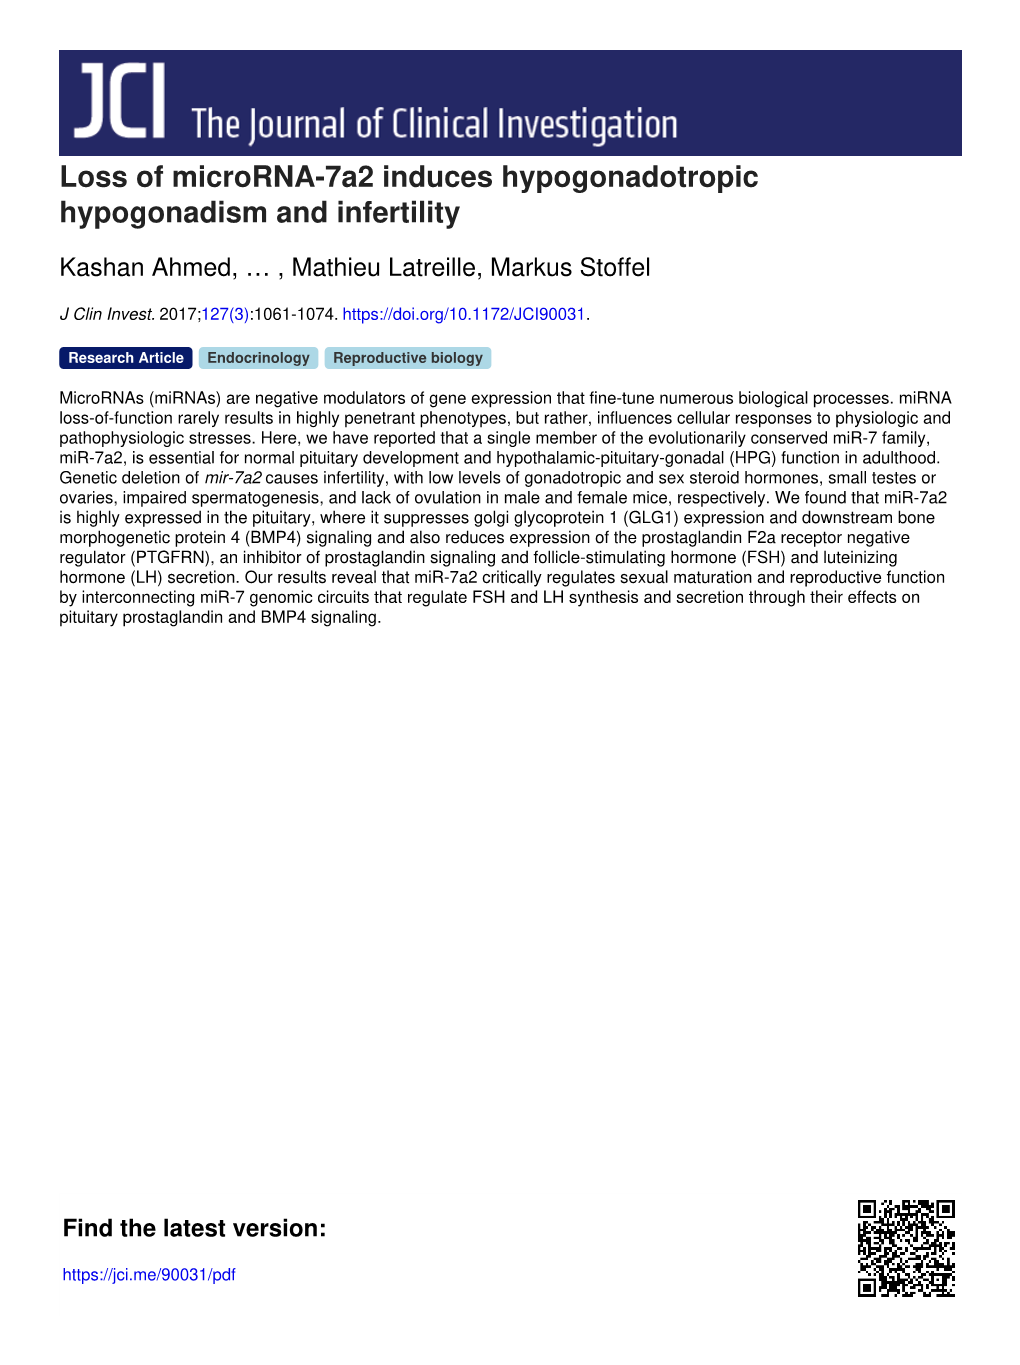 Loss of Microrna-7A2 Induces Hypogonadotropic Hypogonadism and Infertility